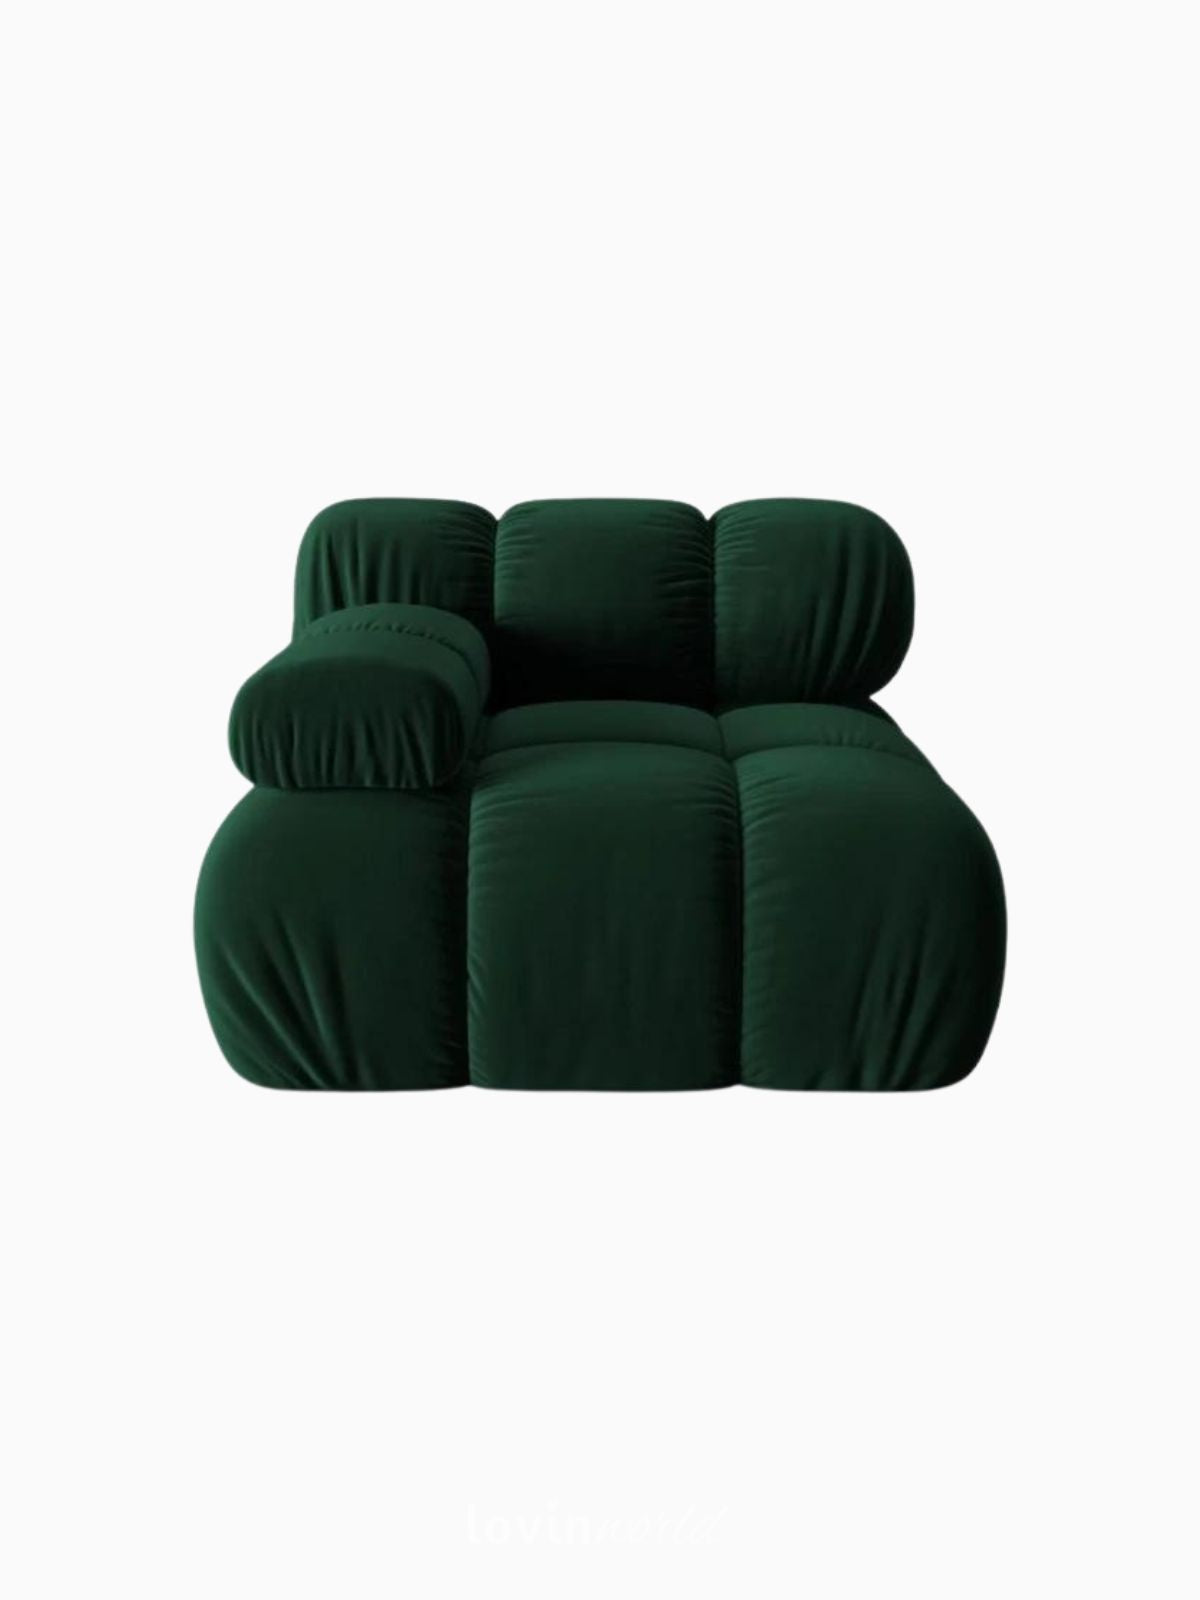 Divano modulare Bellis in velluto, colore verde-1